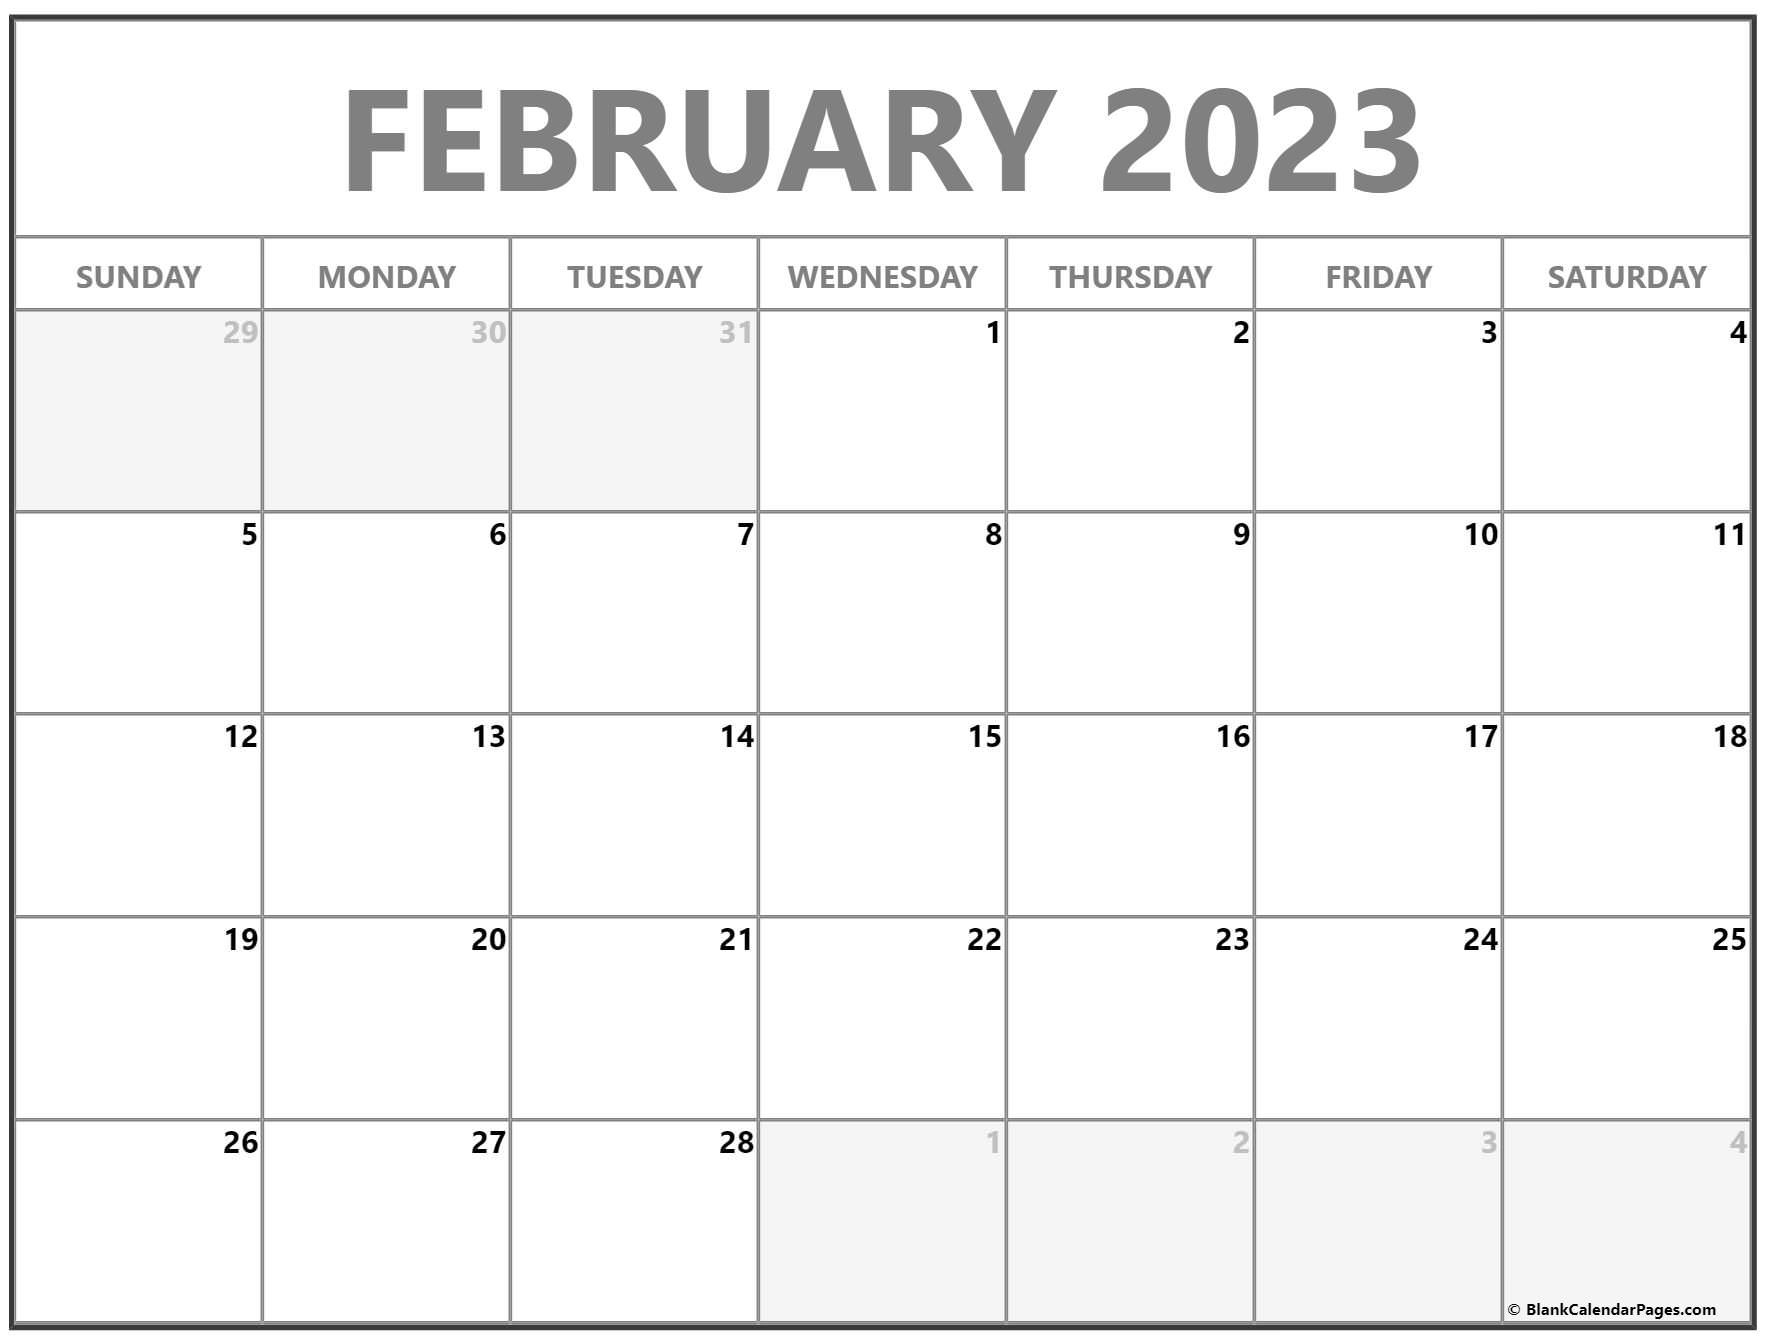 blank-free-february-2023-calendar-page-2023-freeblankcalendar